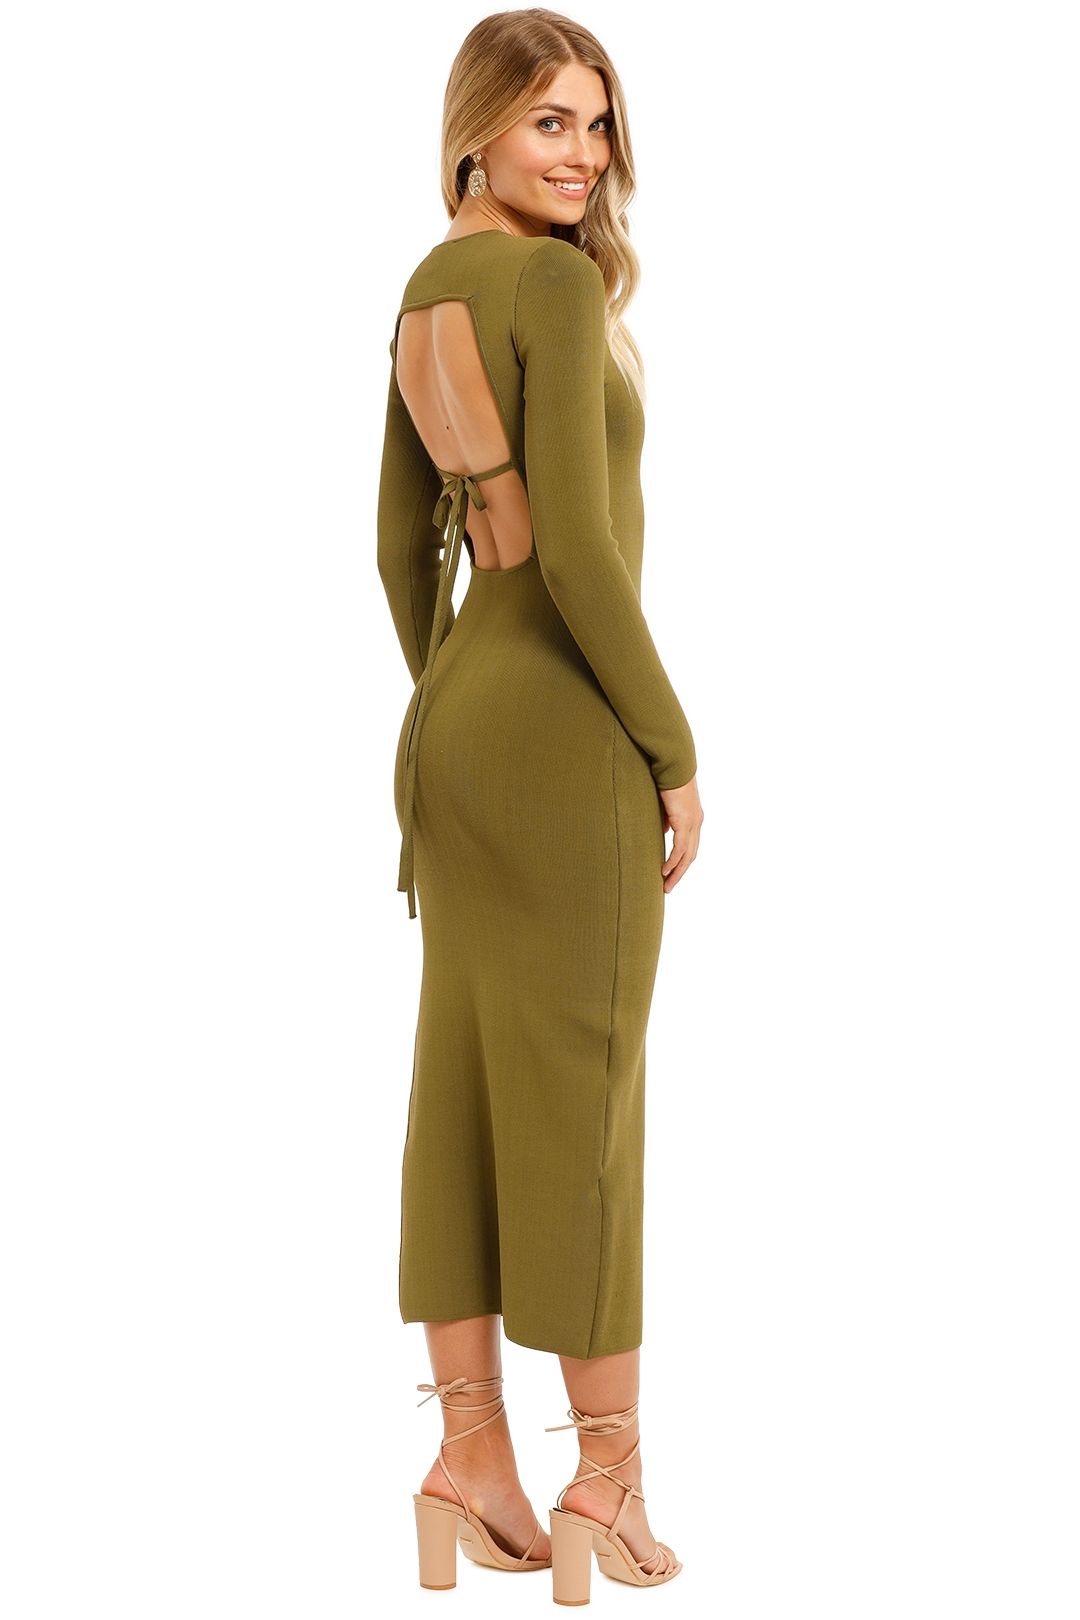 Shona Joy Long Sleeve Backless Midi Dress Olive Backless